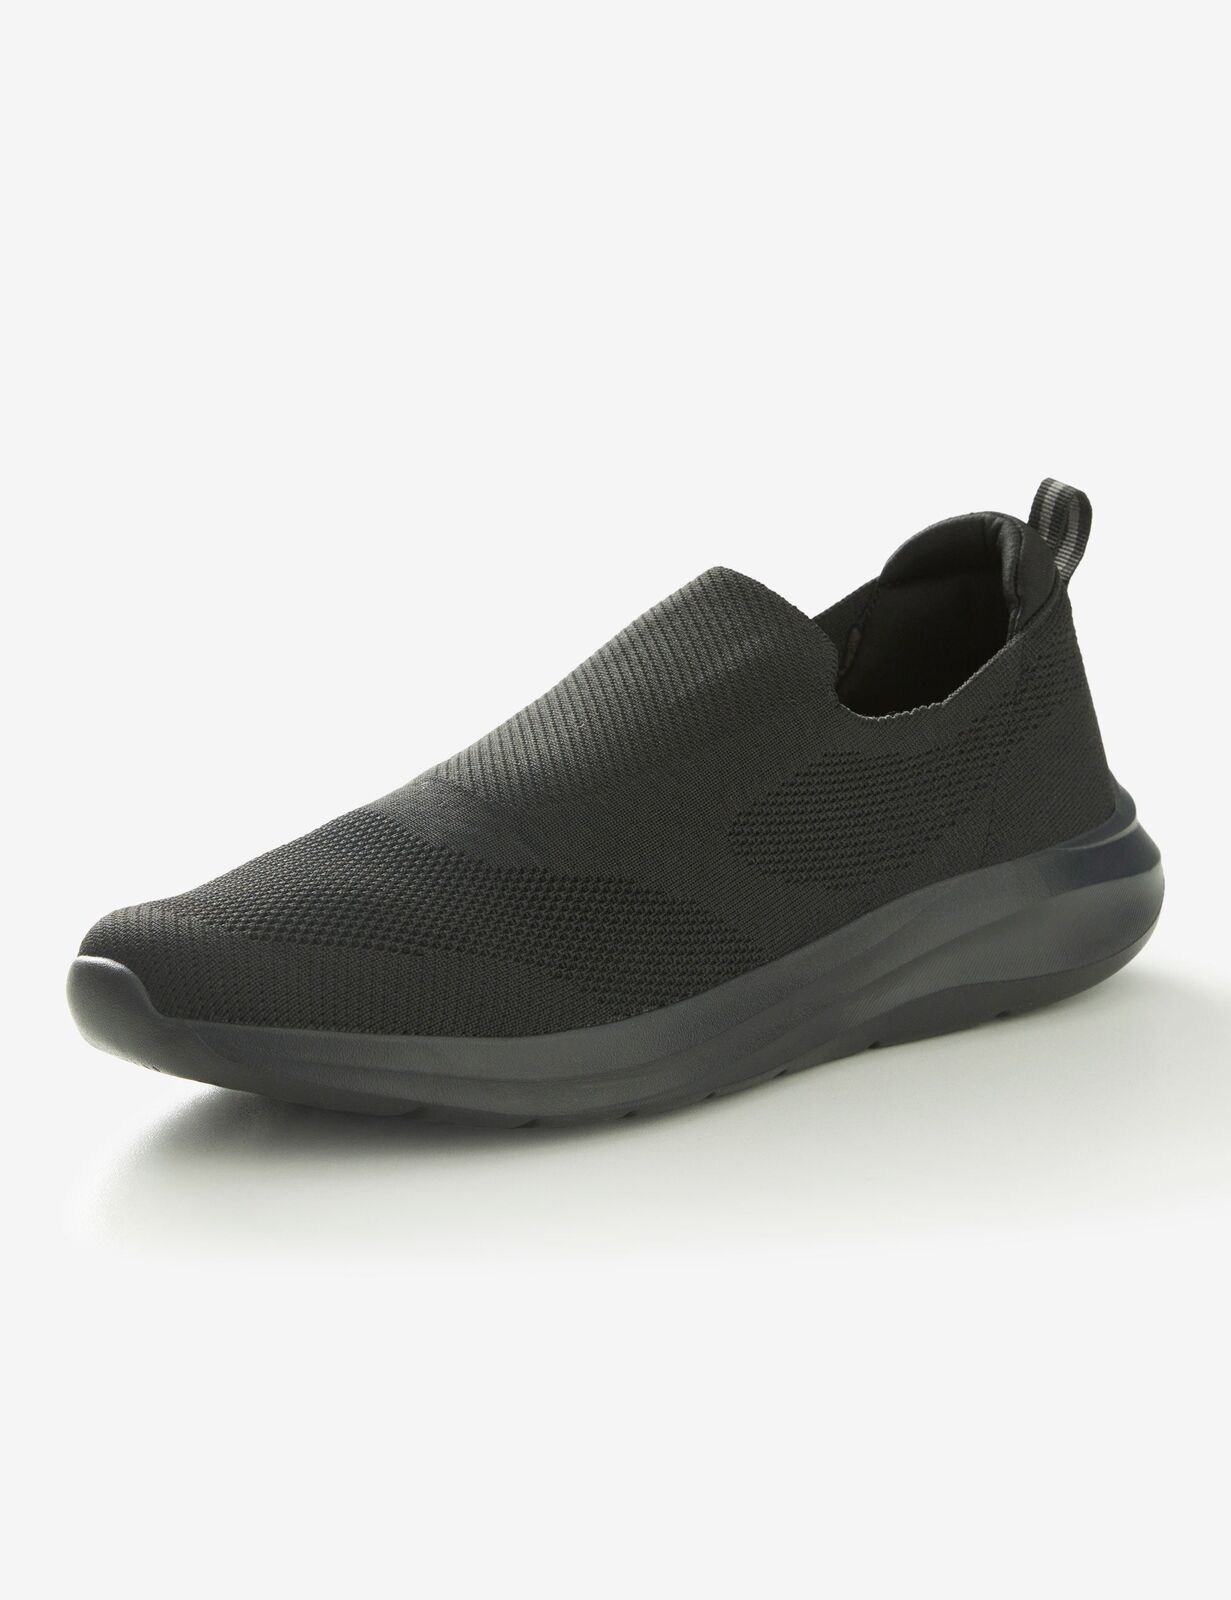 RIVERS - Mens Winter Casual Shoes - Slip On - Black Loafers Work Office Footwear